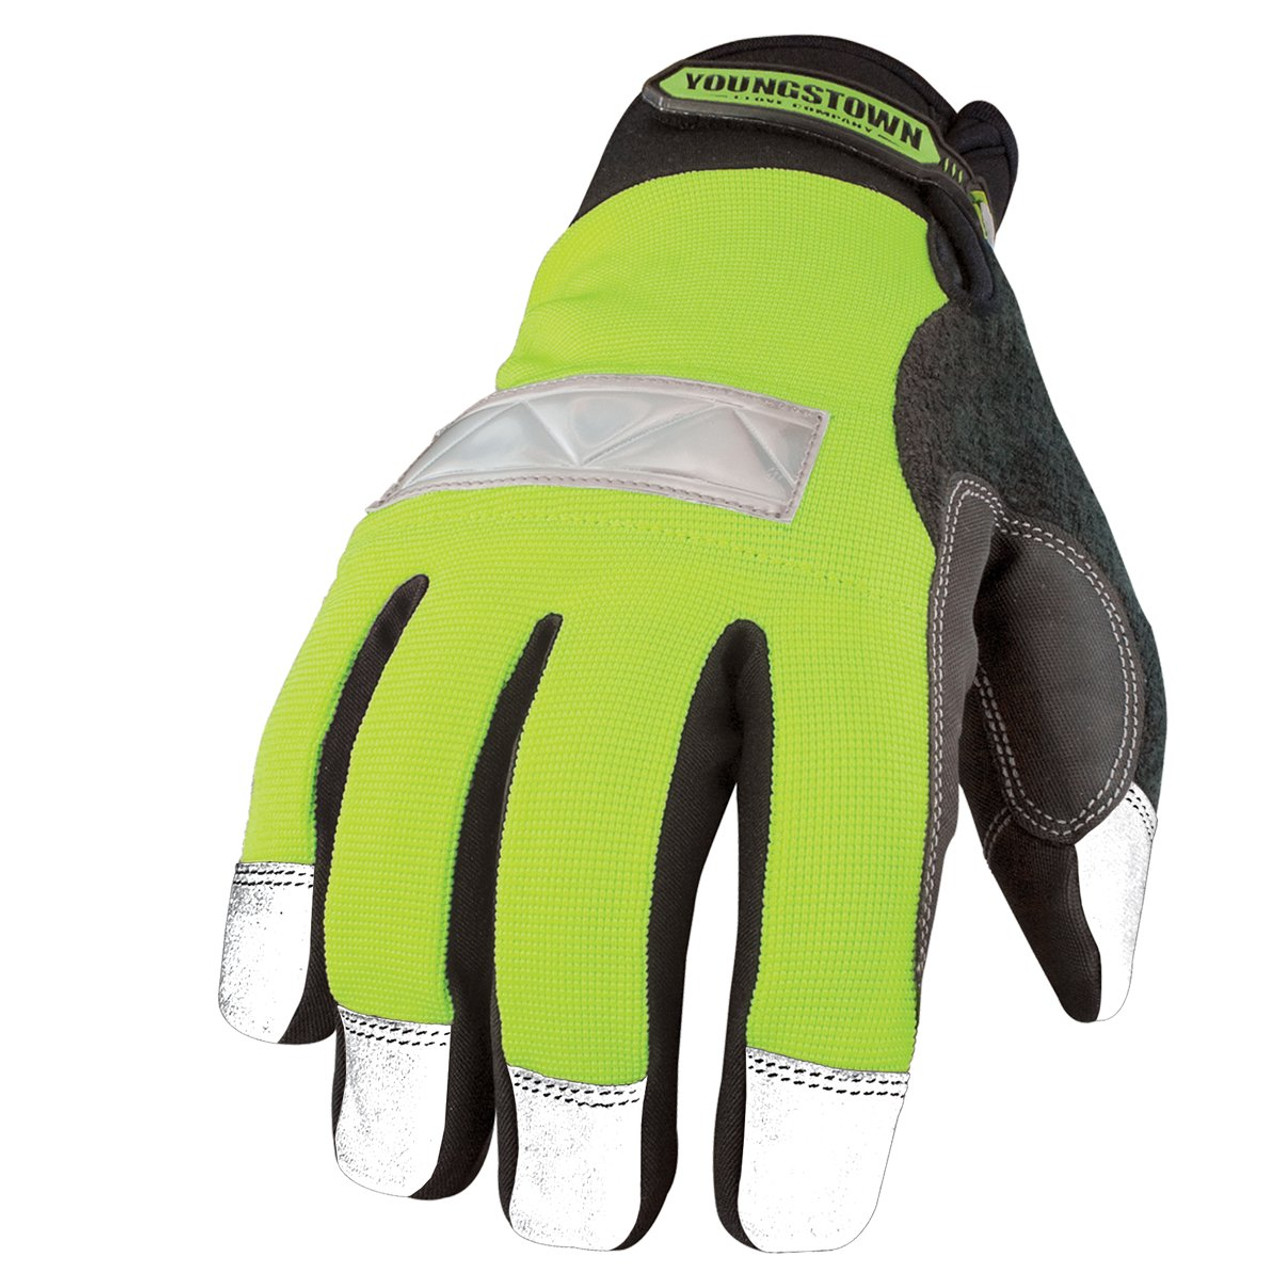 Youngstown Glove 08-3710-10-xxl セーフティ ライム 防水ウィンター グローブ xx-large JBツール販売